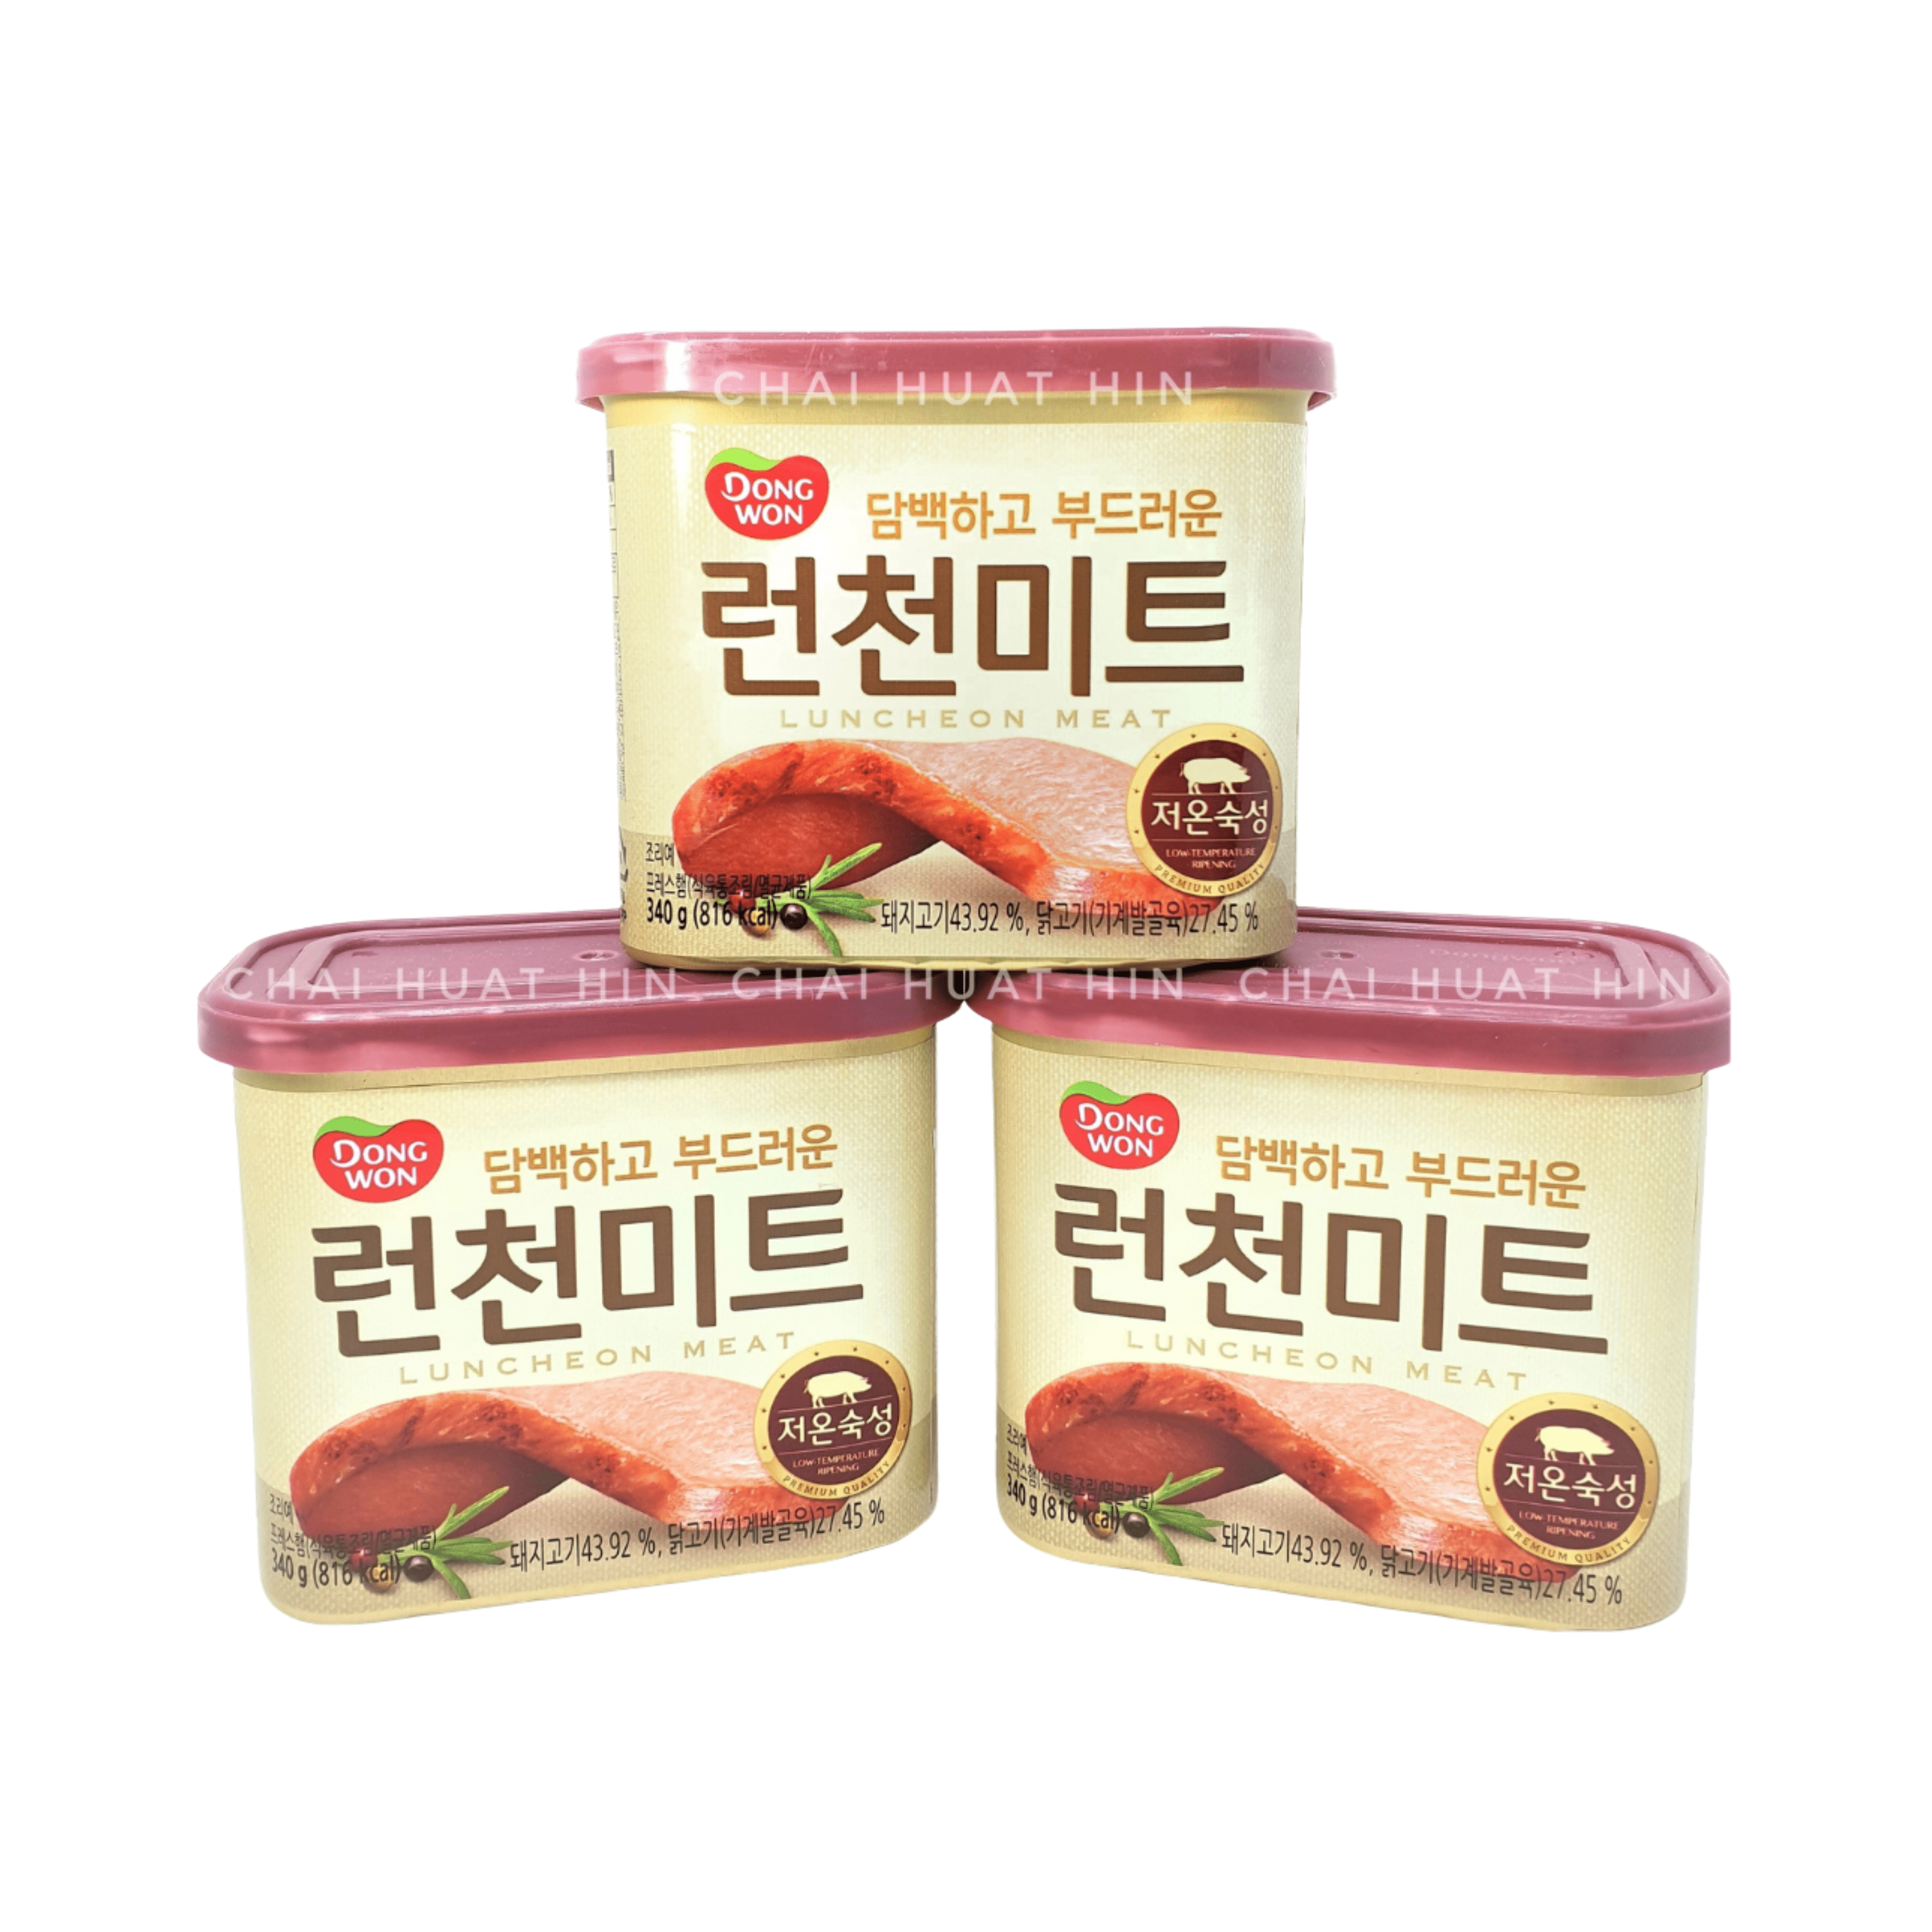 Dong Won Korean Premium Luncheon Meat (less salt) Promo Set [3 can]